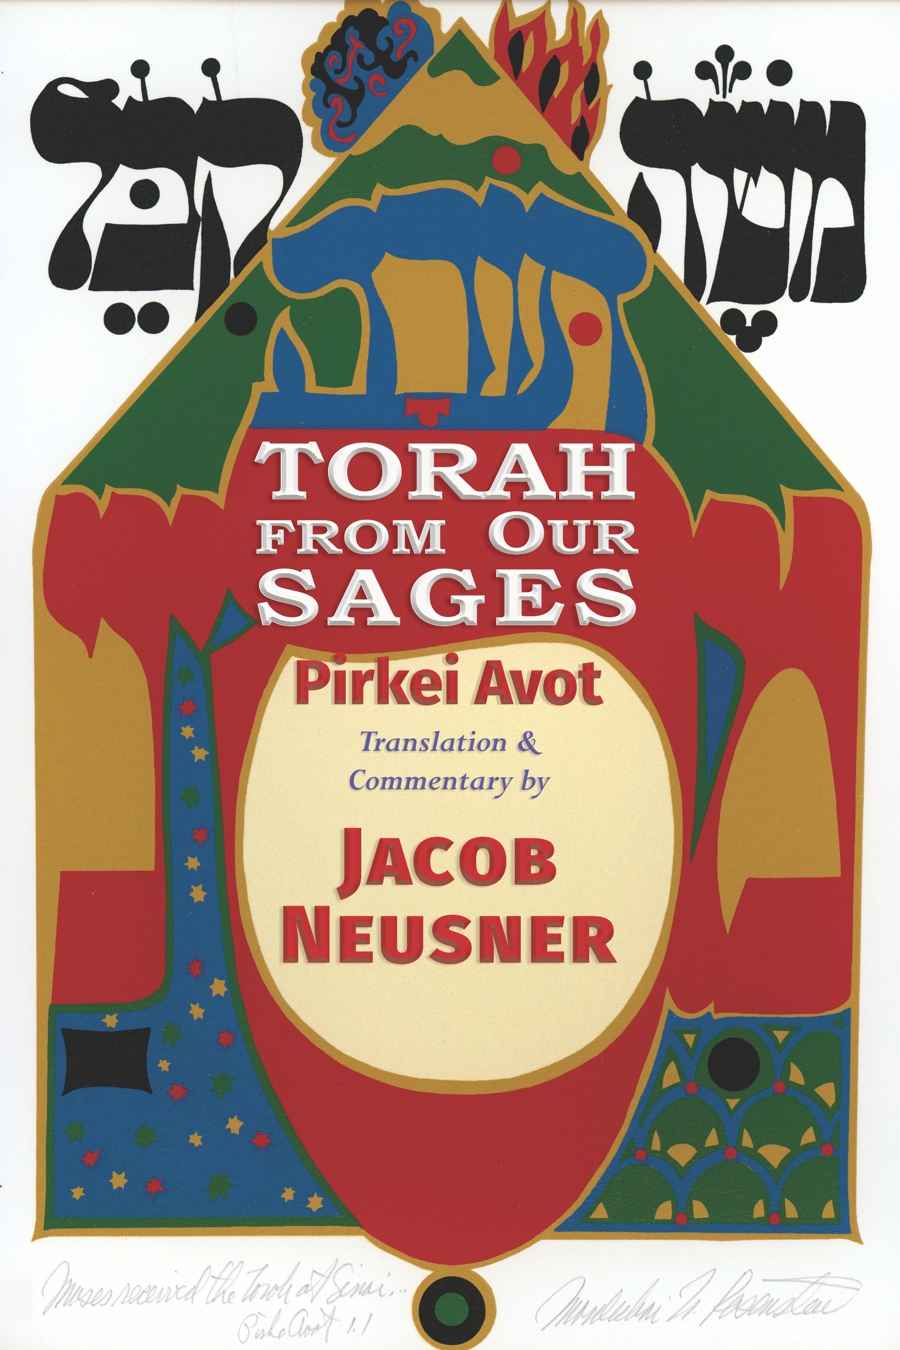 Pirkei Avot: Torah from Our Sages